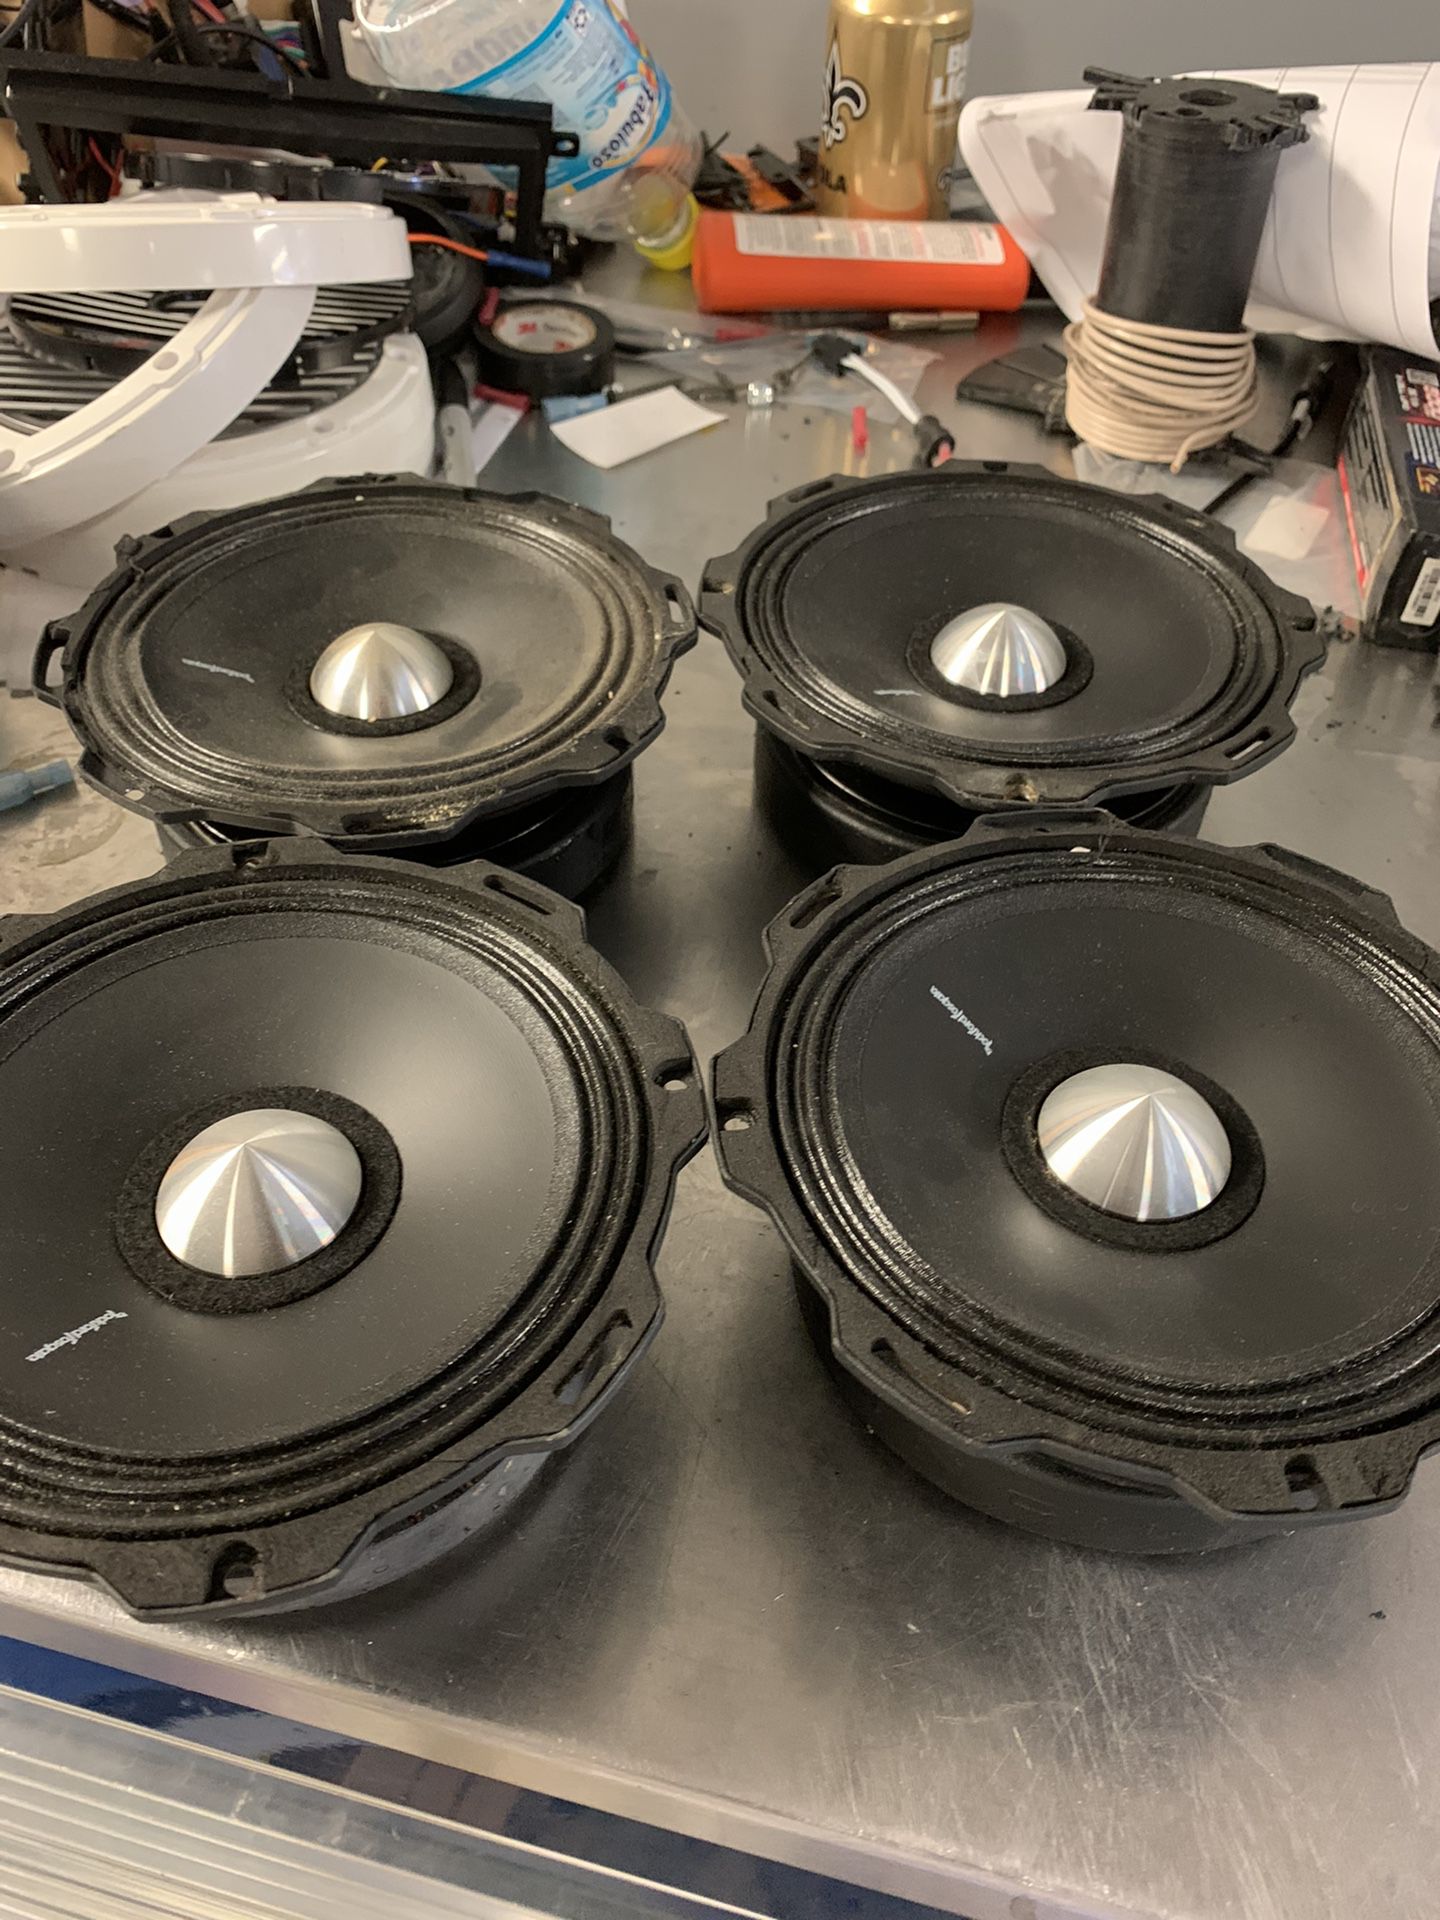 Rockford fosgate 6.5 pro audio speakers